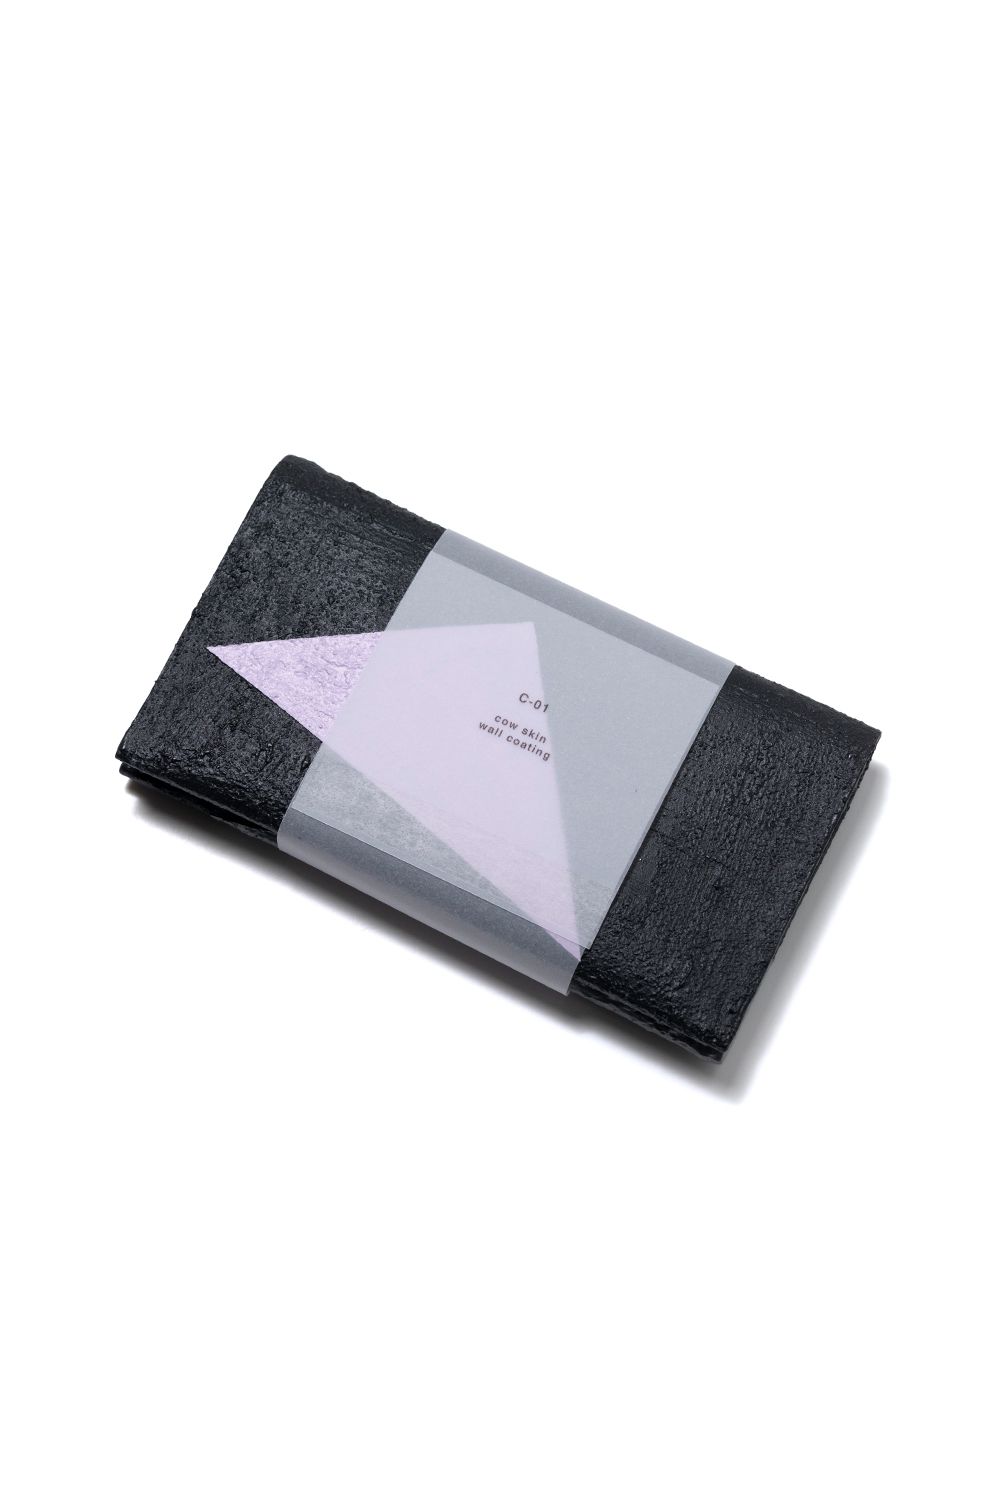 KAGARI YUSUKE - 【お取り寄せ可能】カードケース(名刺入れ) [黒い壁 